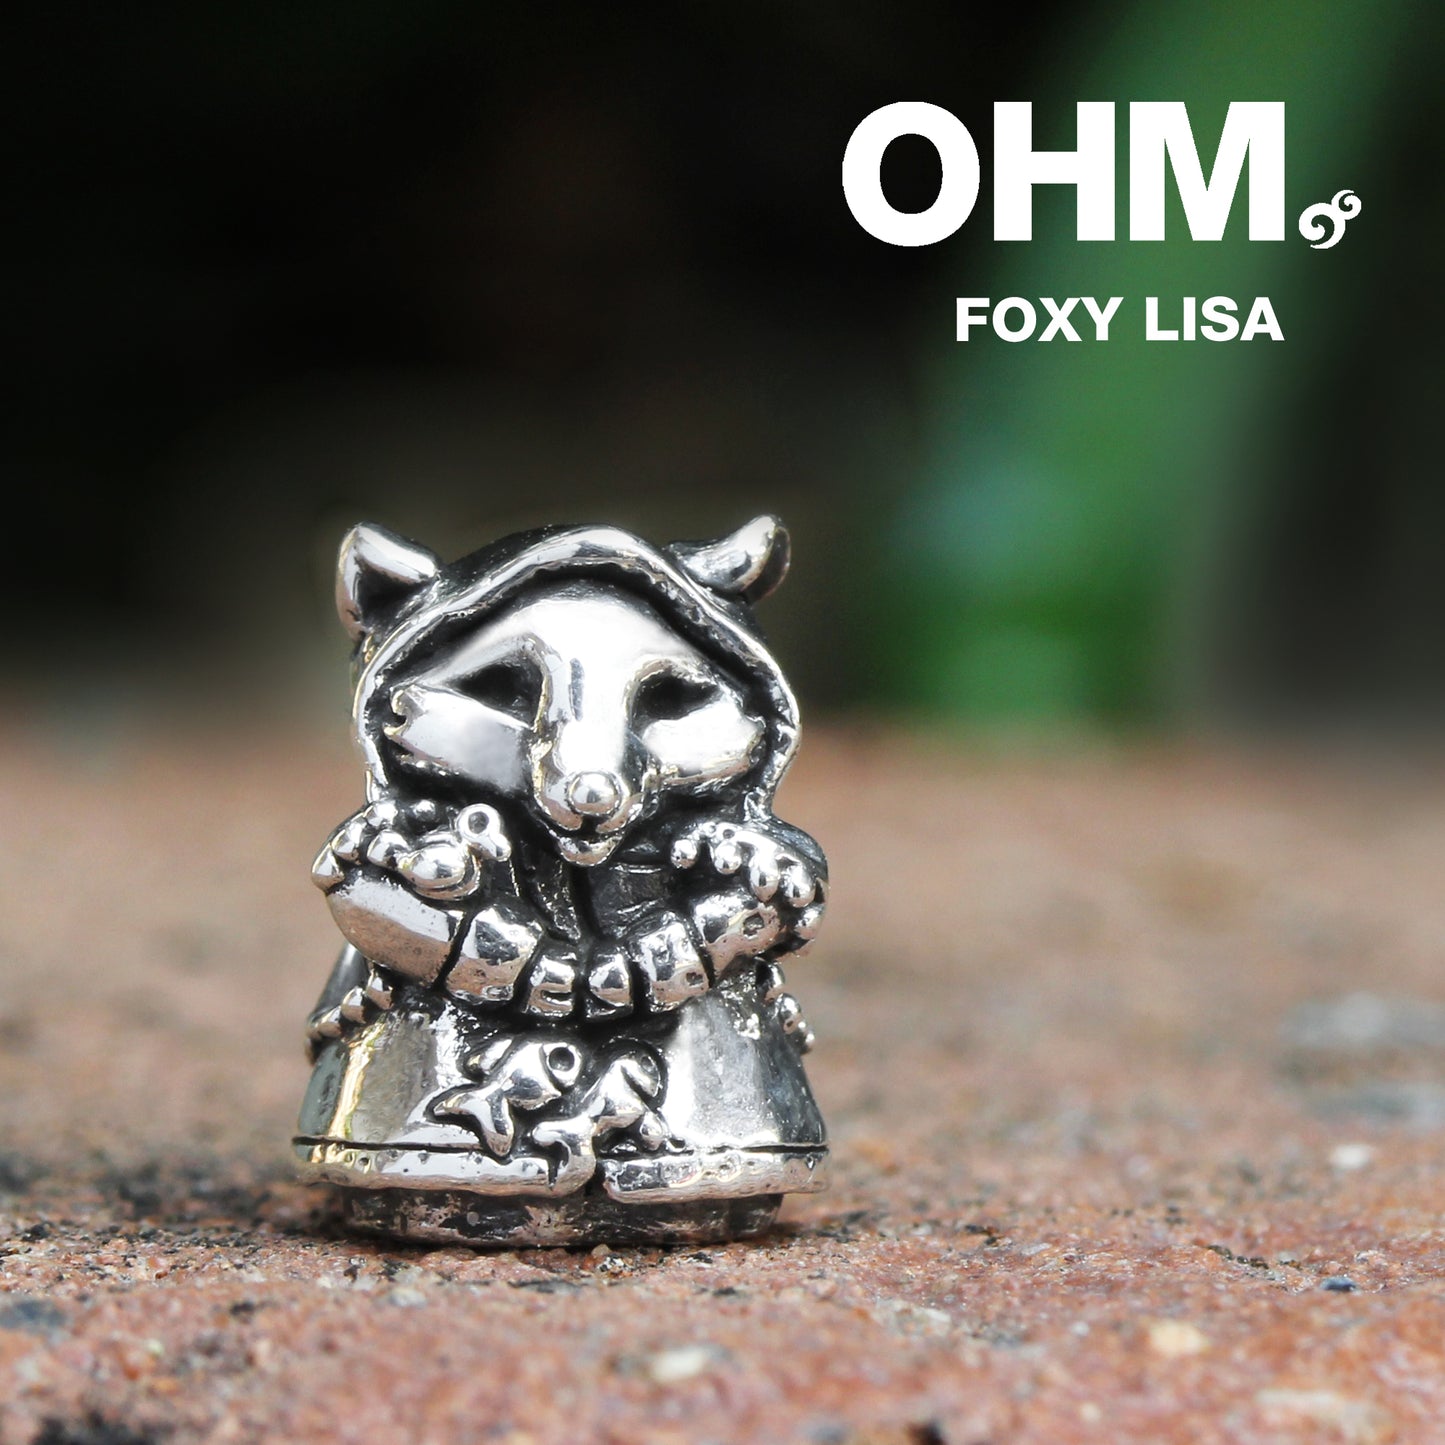 Foxy Lisa